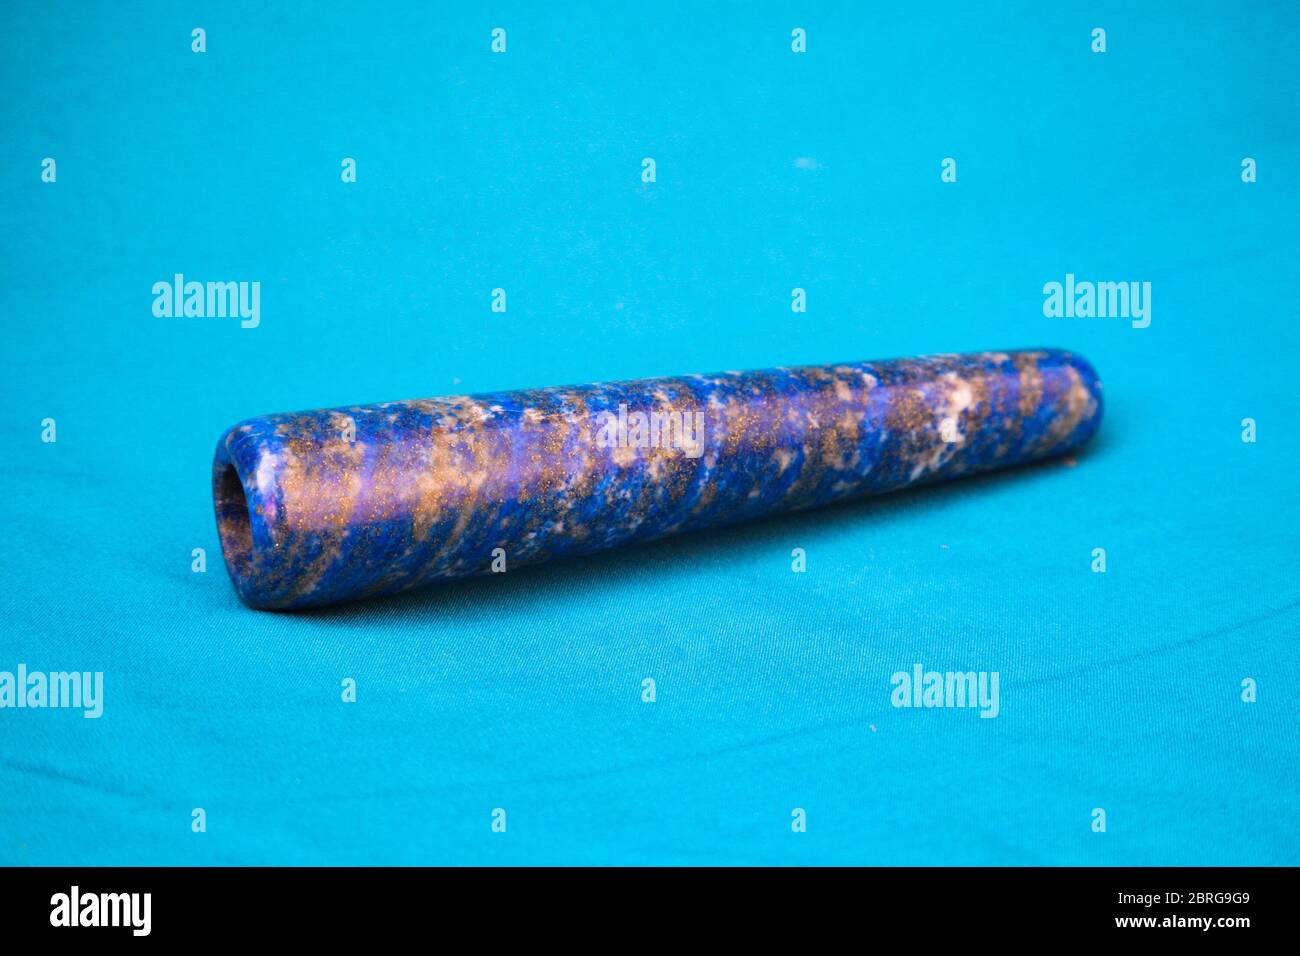 Clay chillum for marijuana smoking on a blue fabric background Stock Photo